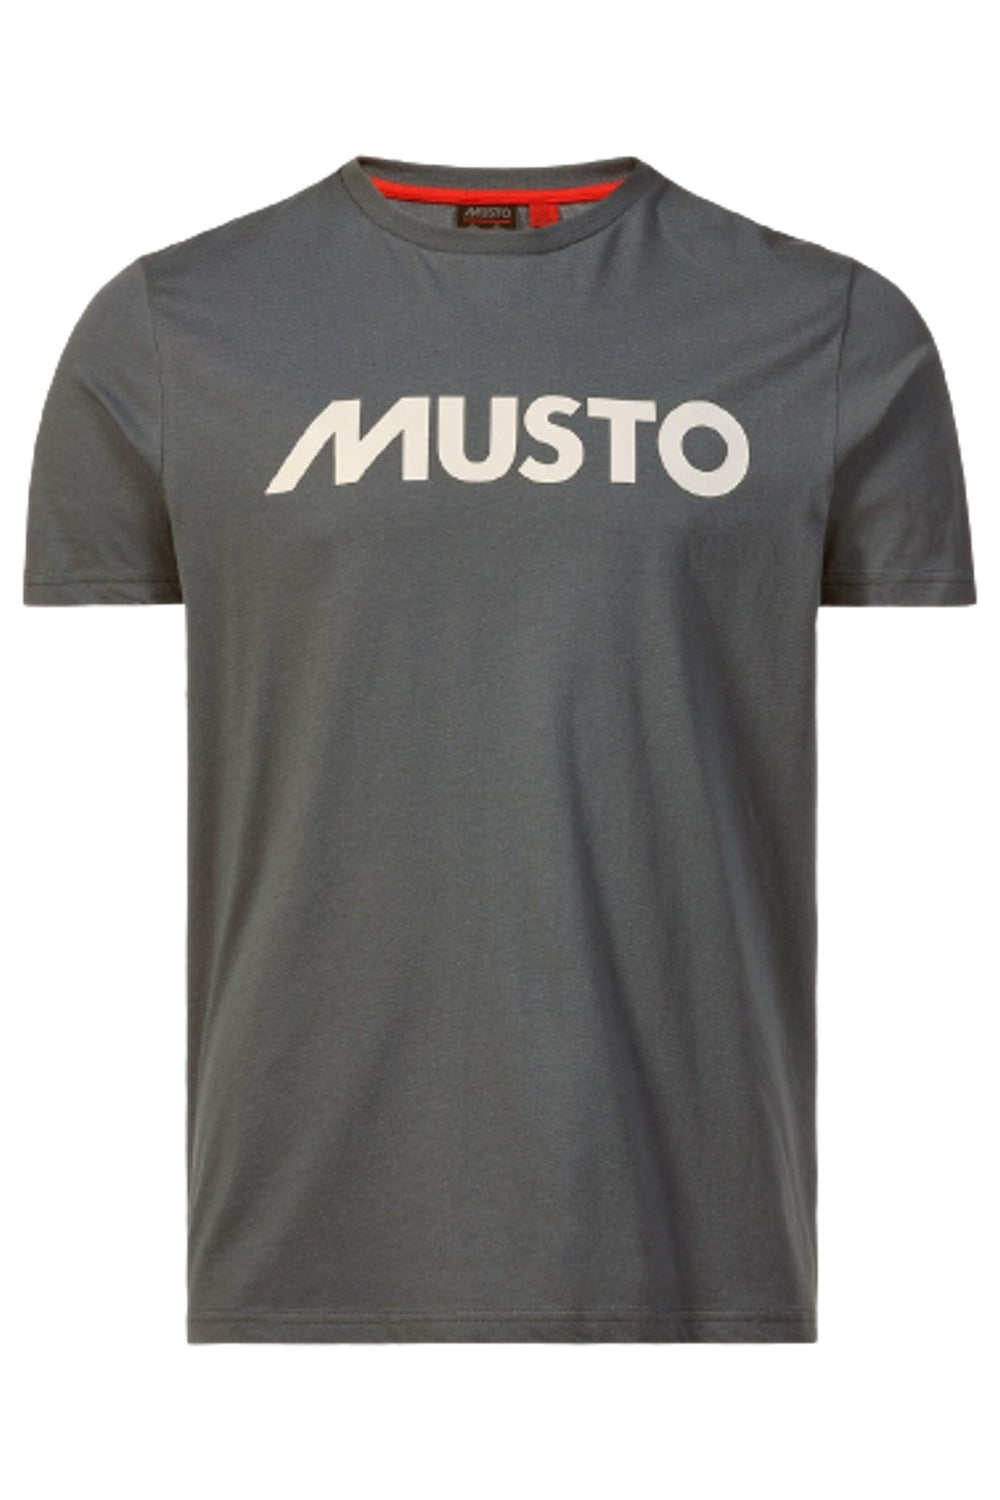 Musto Sailing T-Shirt in Turbulance 